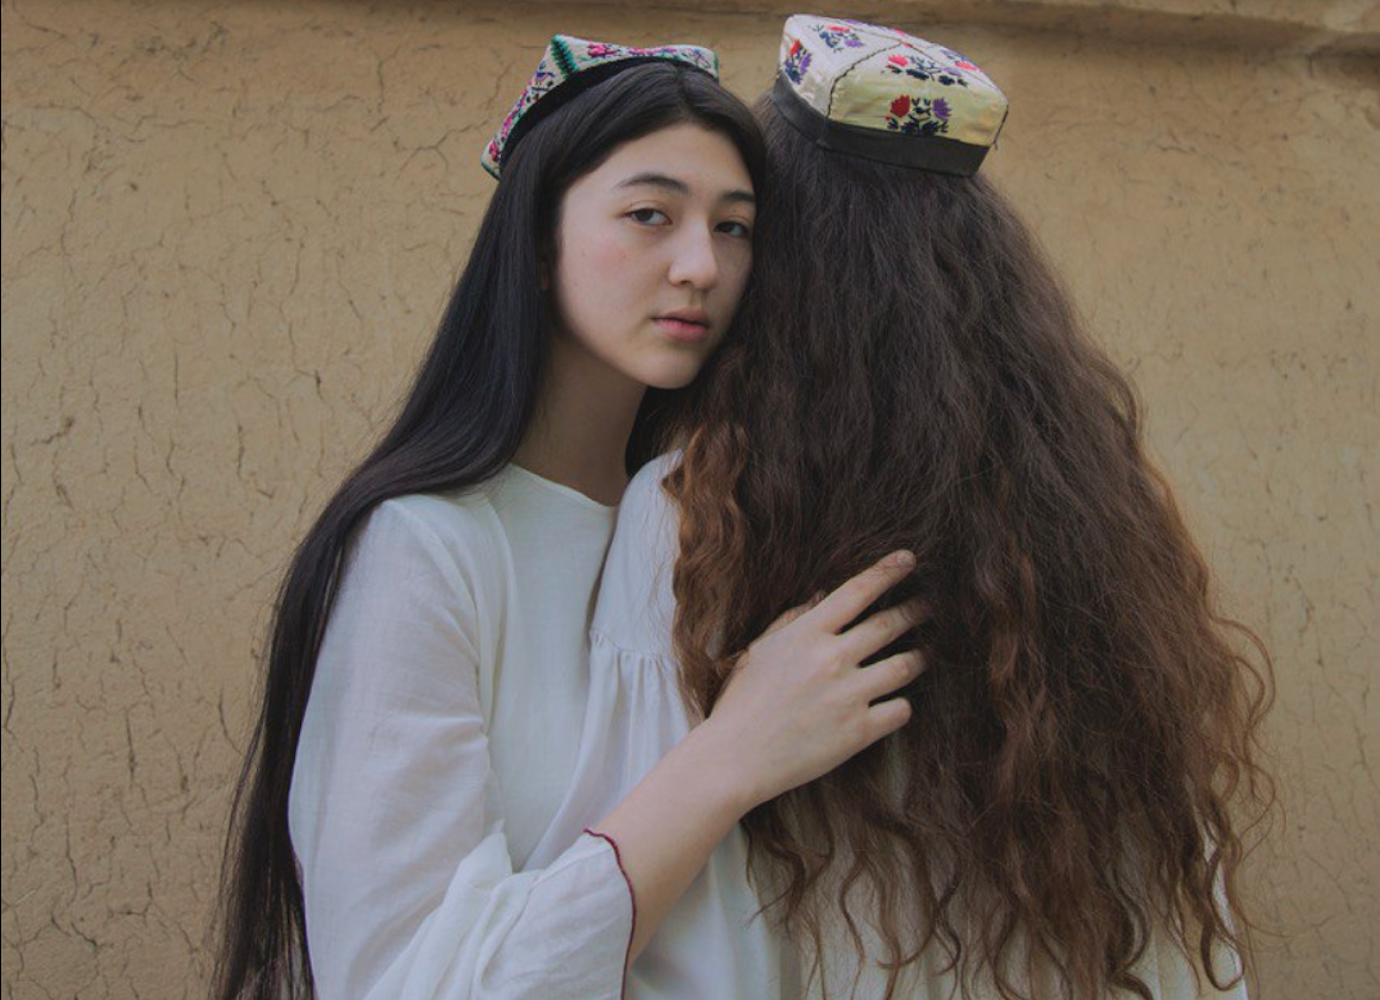 Daring photos show womanhood and forbidden love in contemporary Uzbekistan